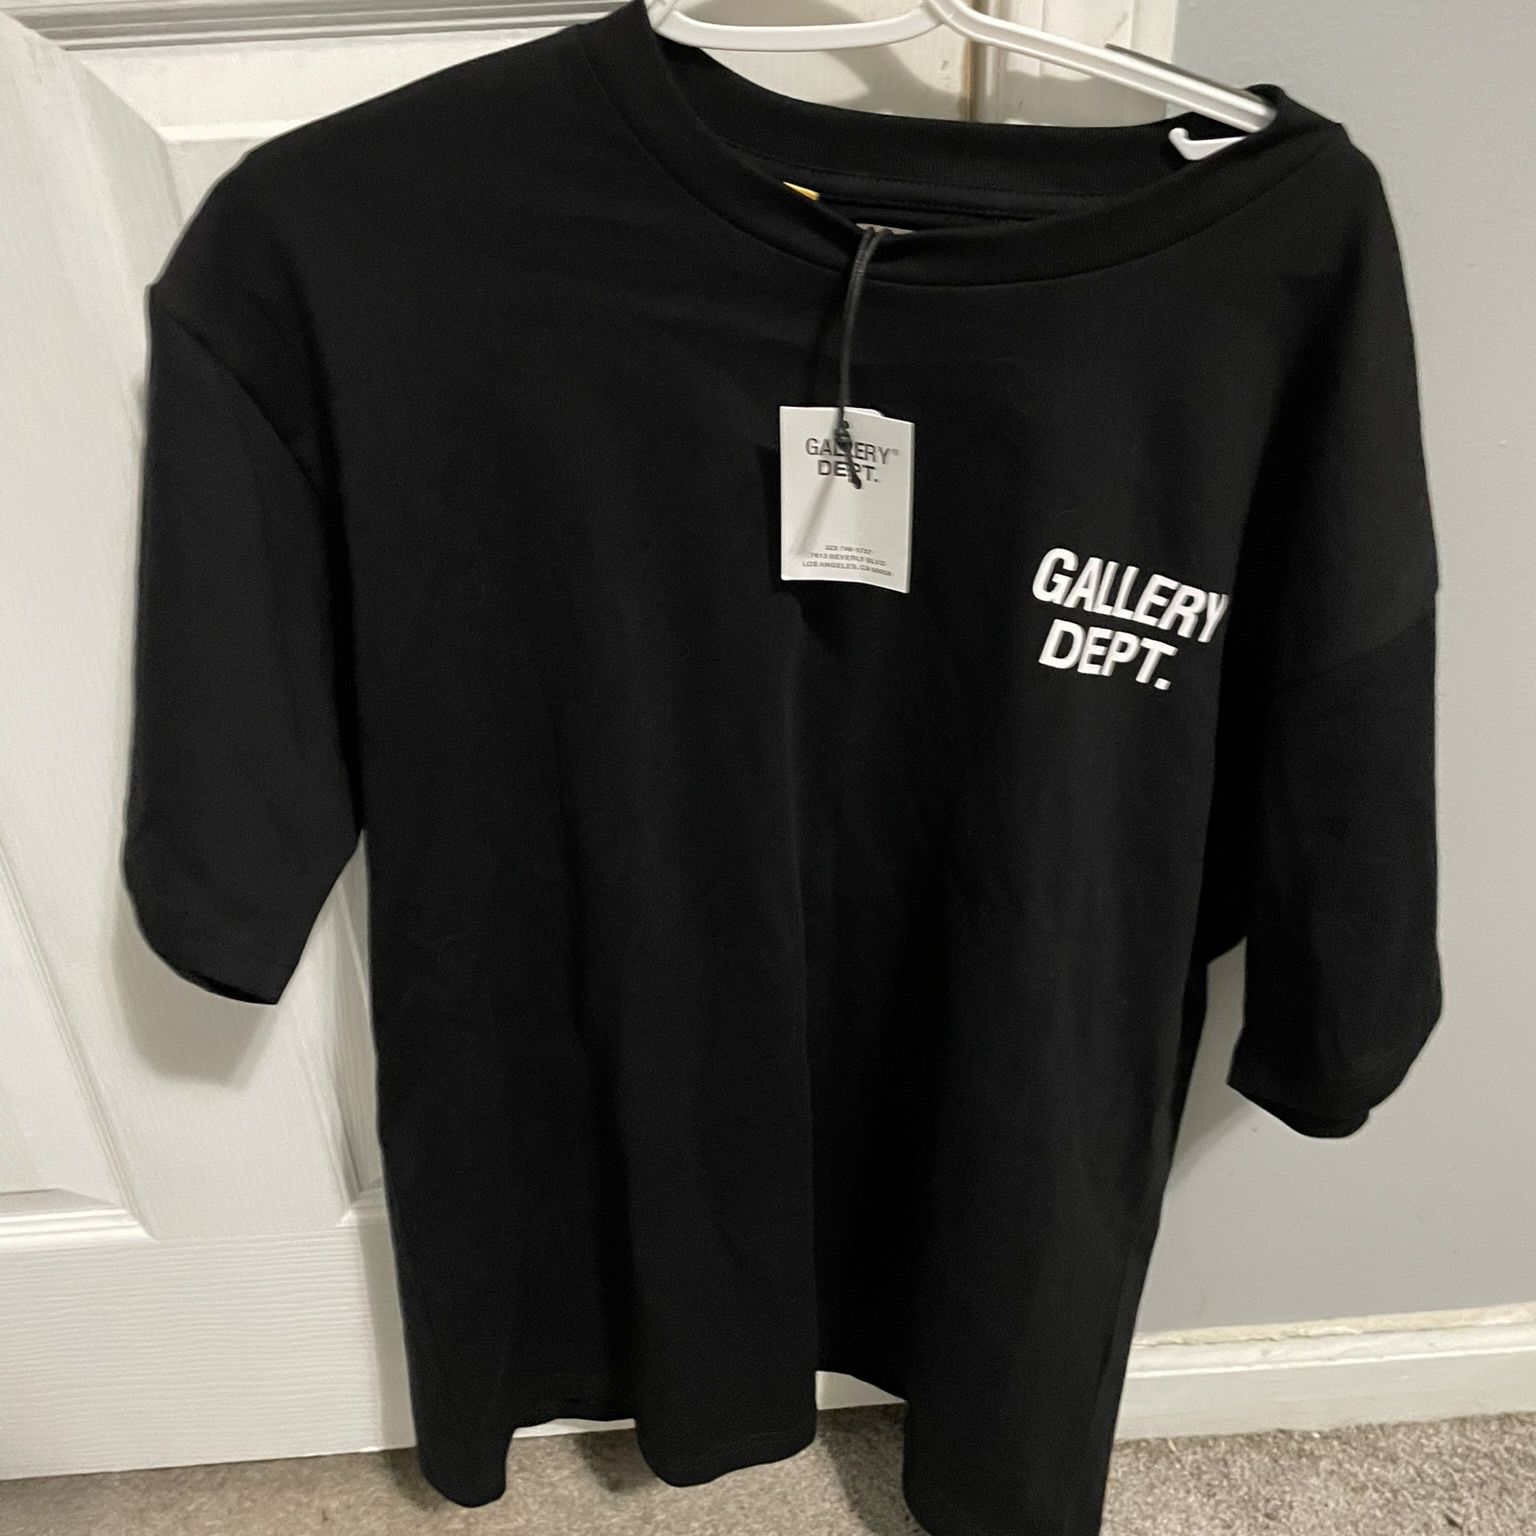 Gallery Dept. Souvenir Shirt Black Small  